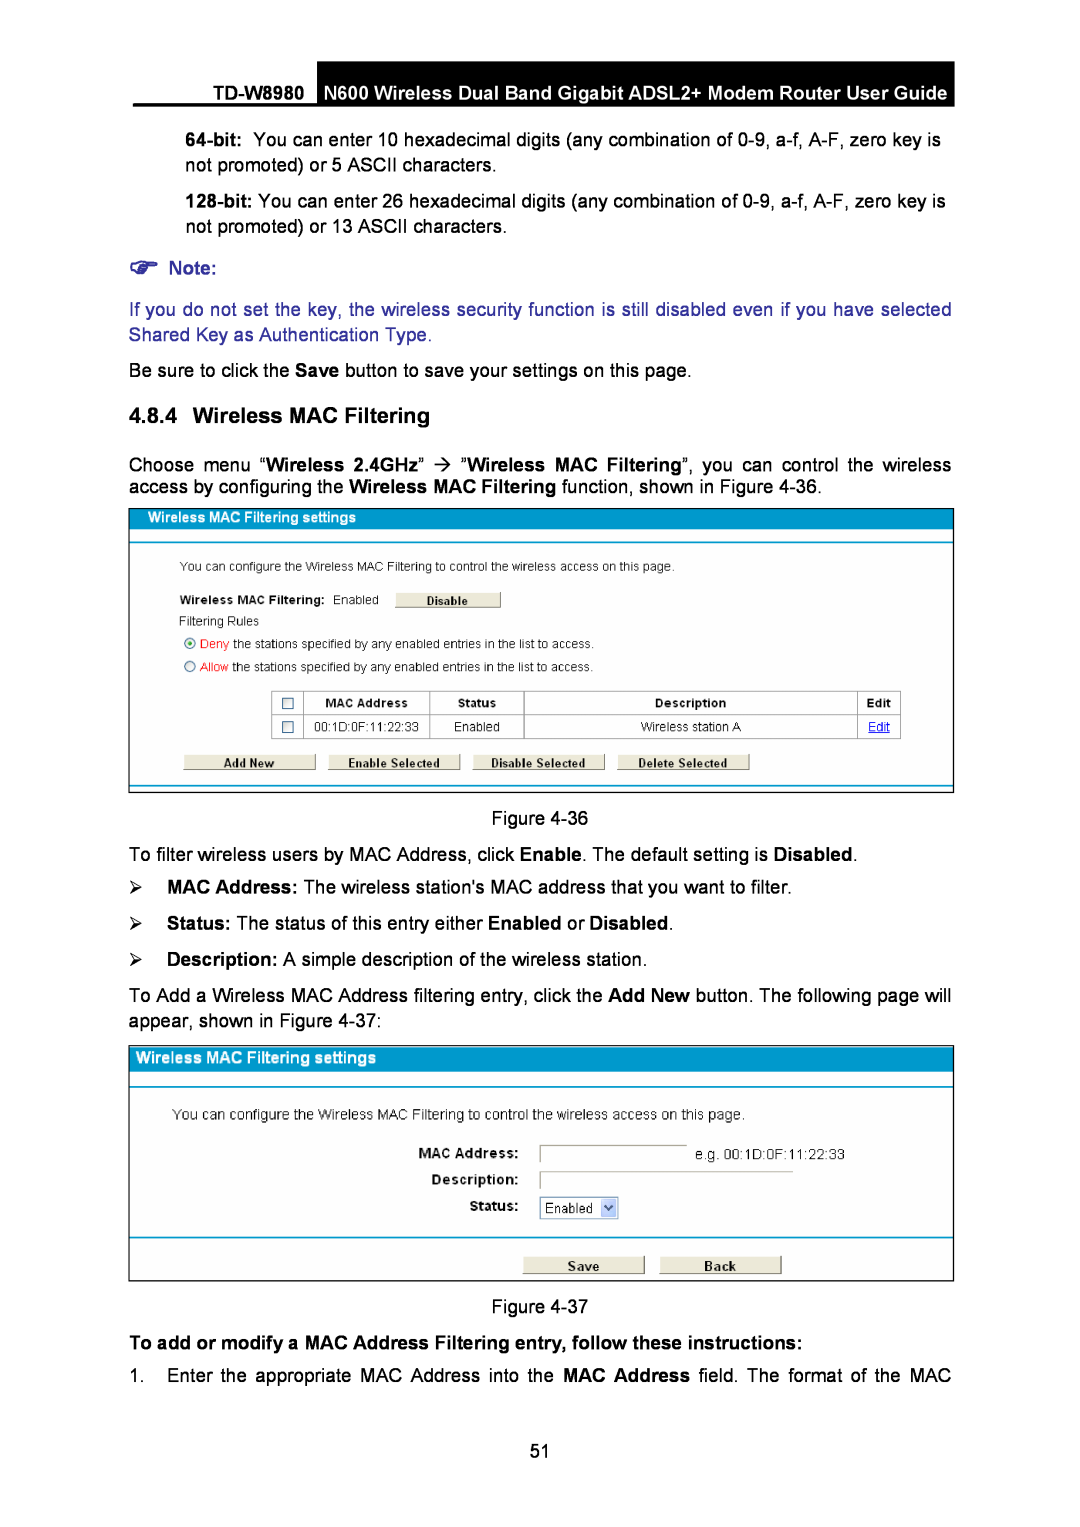 TP-Link TD-W8980 manual Wireless MAC Filtering, N600 Wireless Dual Band Gigabit ADSL2+ Modem Router User Guide 